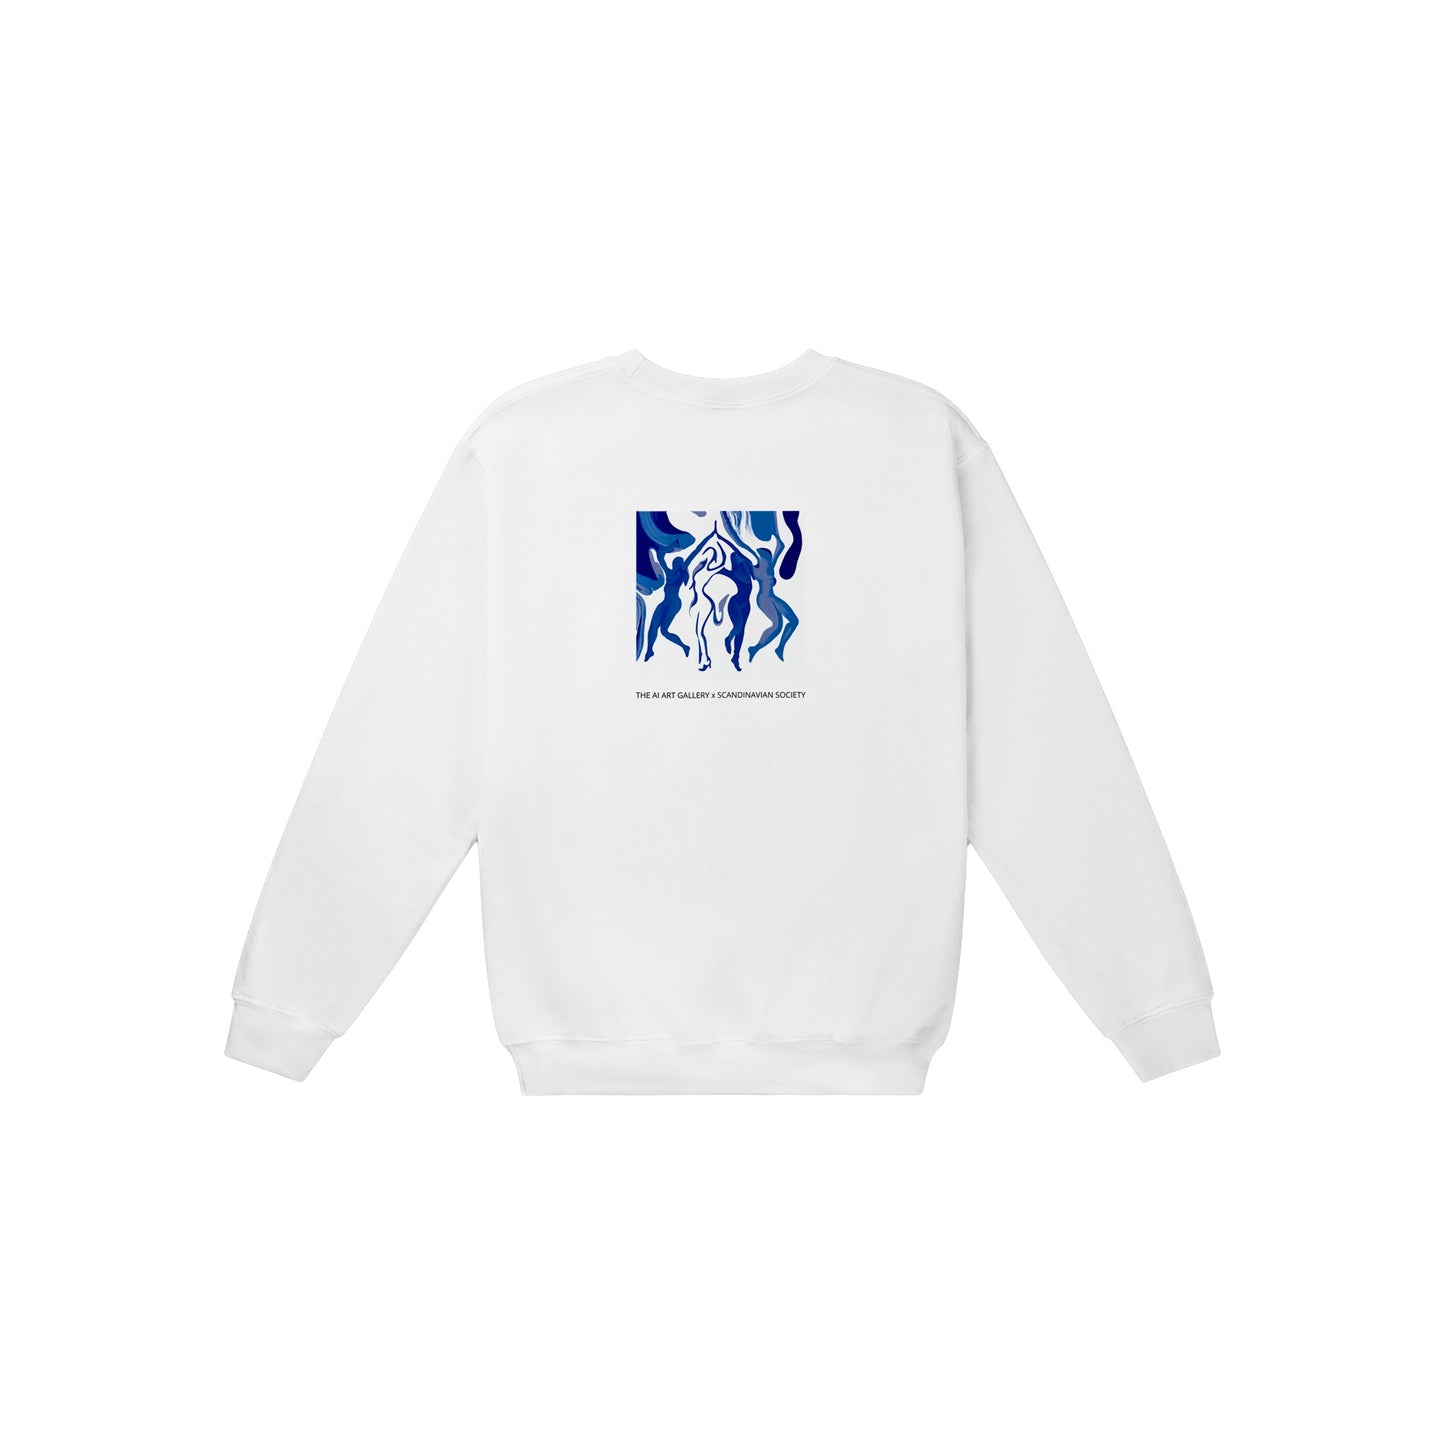 SCANDI Collaboration /  Sweatshirt / white